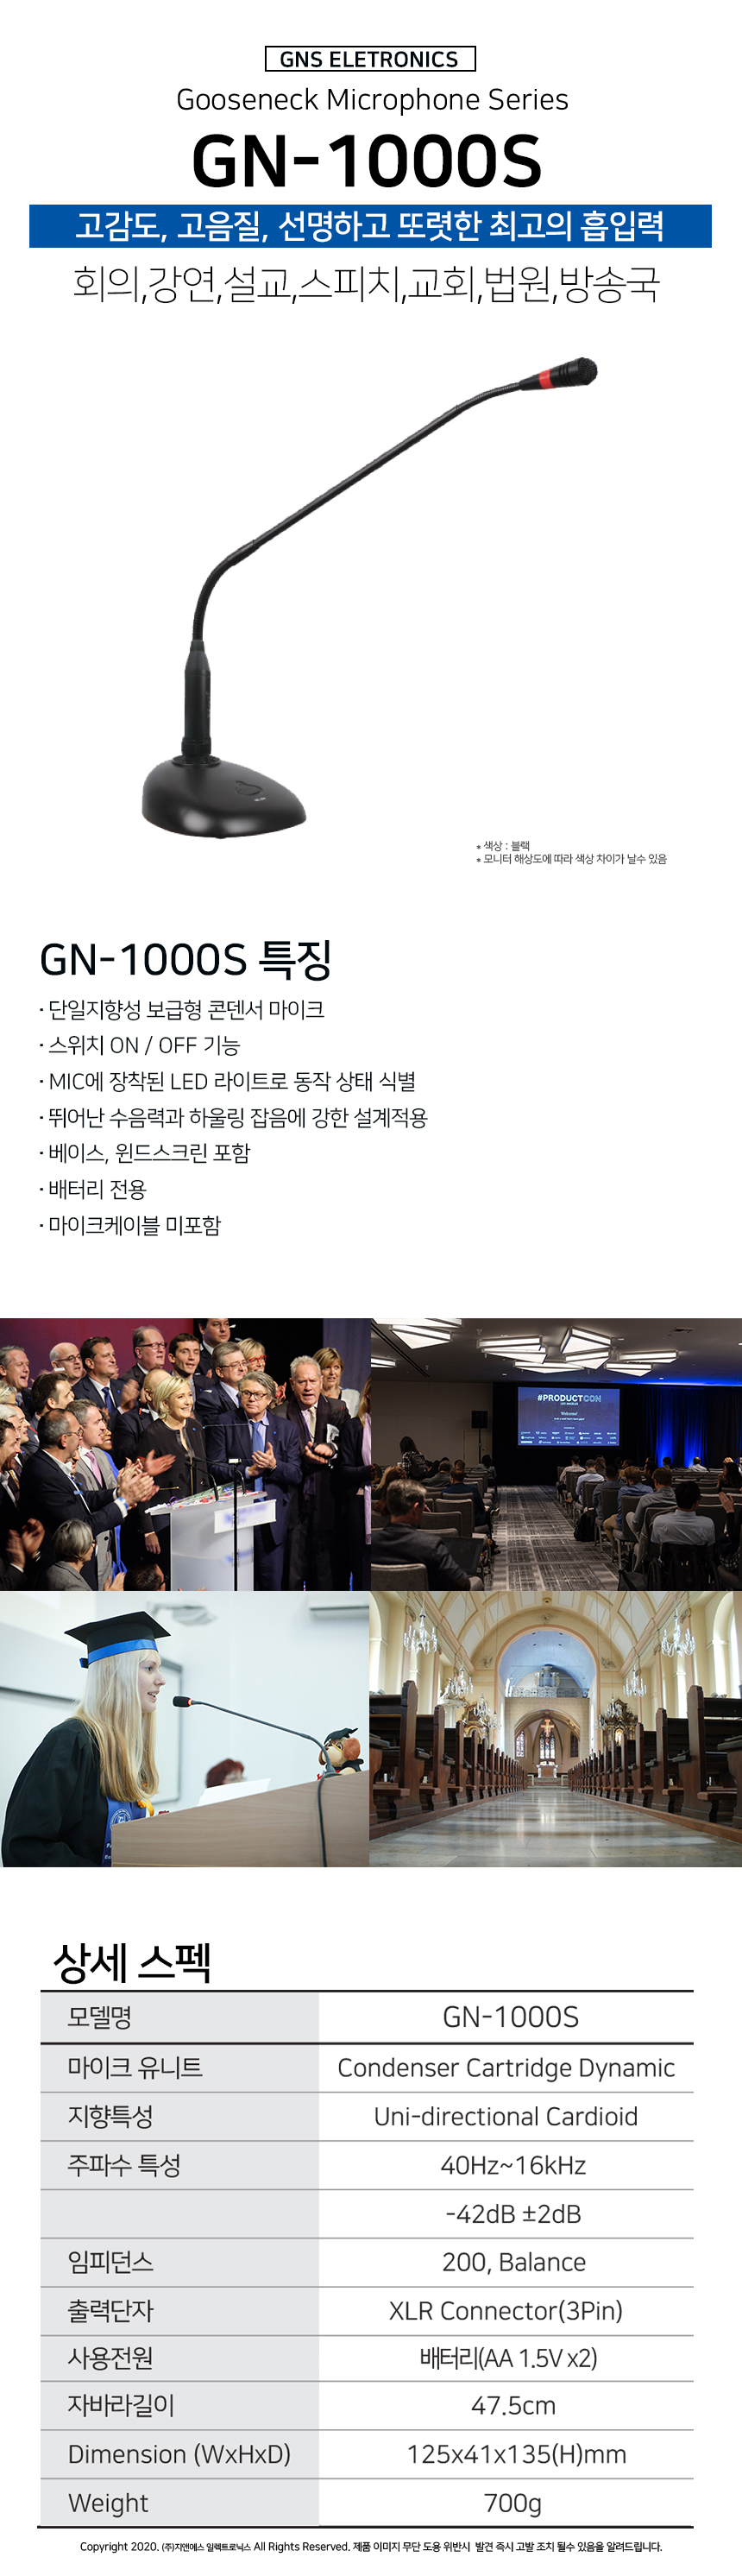 GN-1000S-Gooseneck-microphone-GNS.jpg